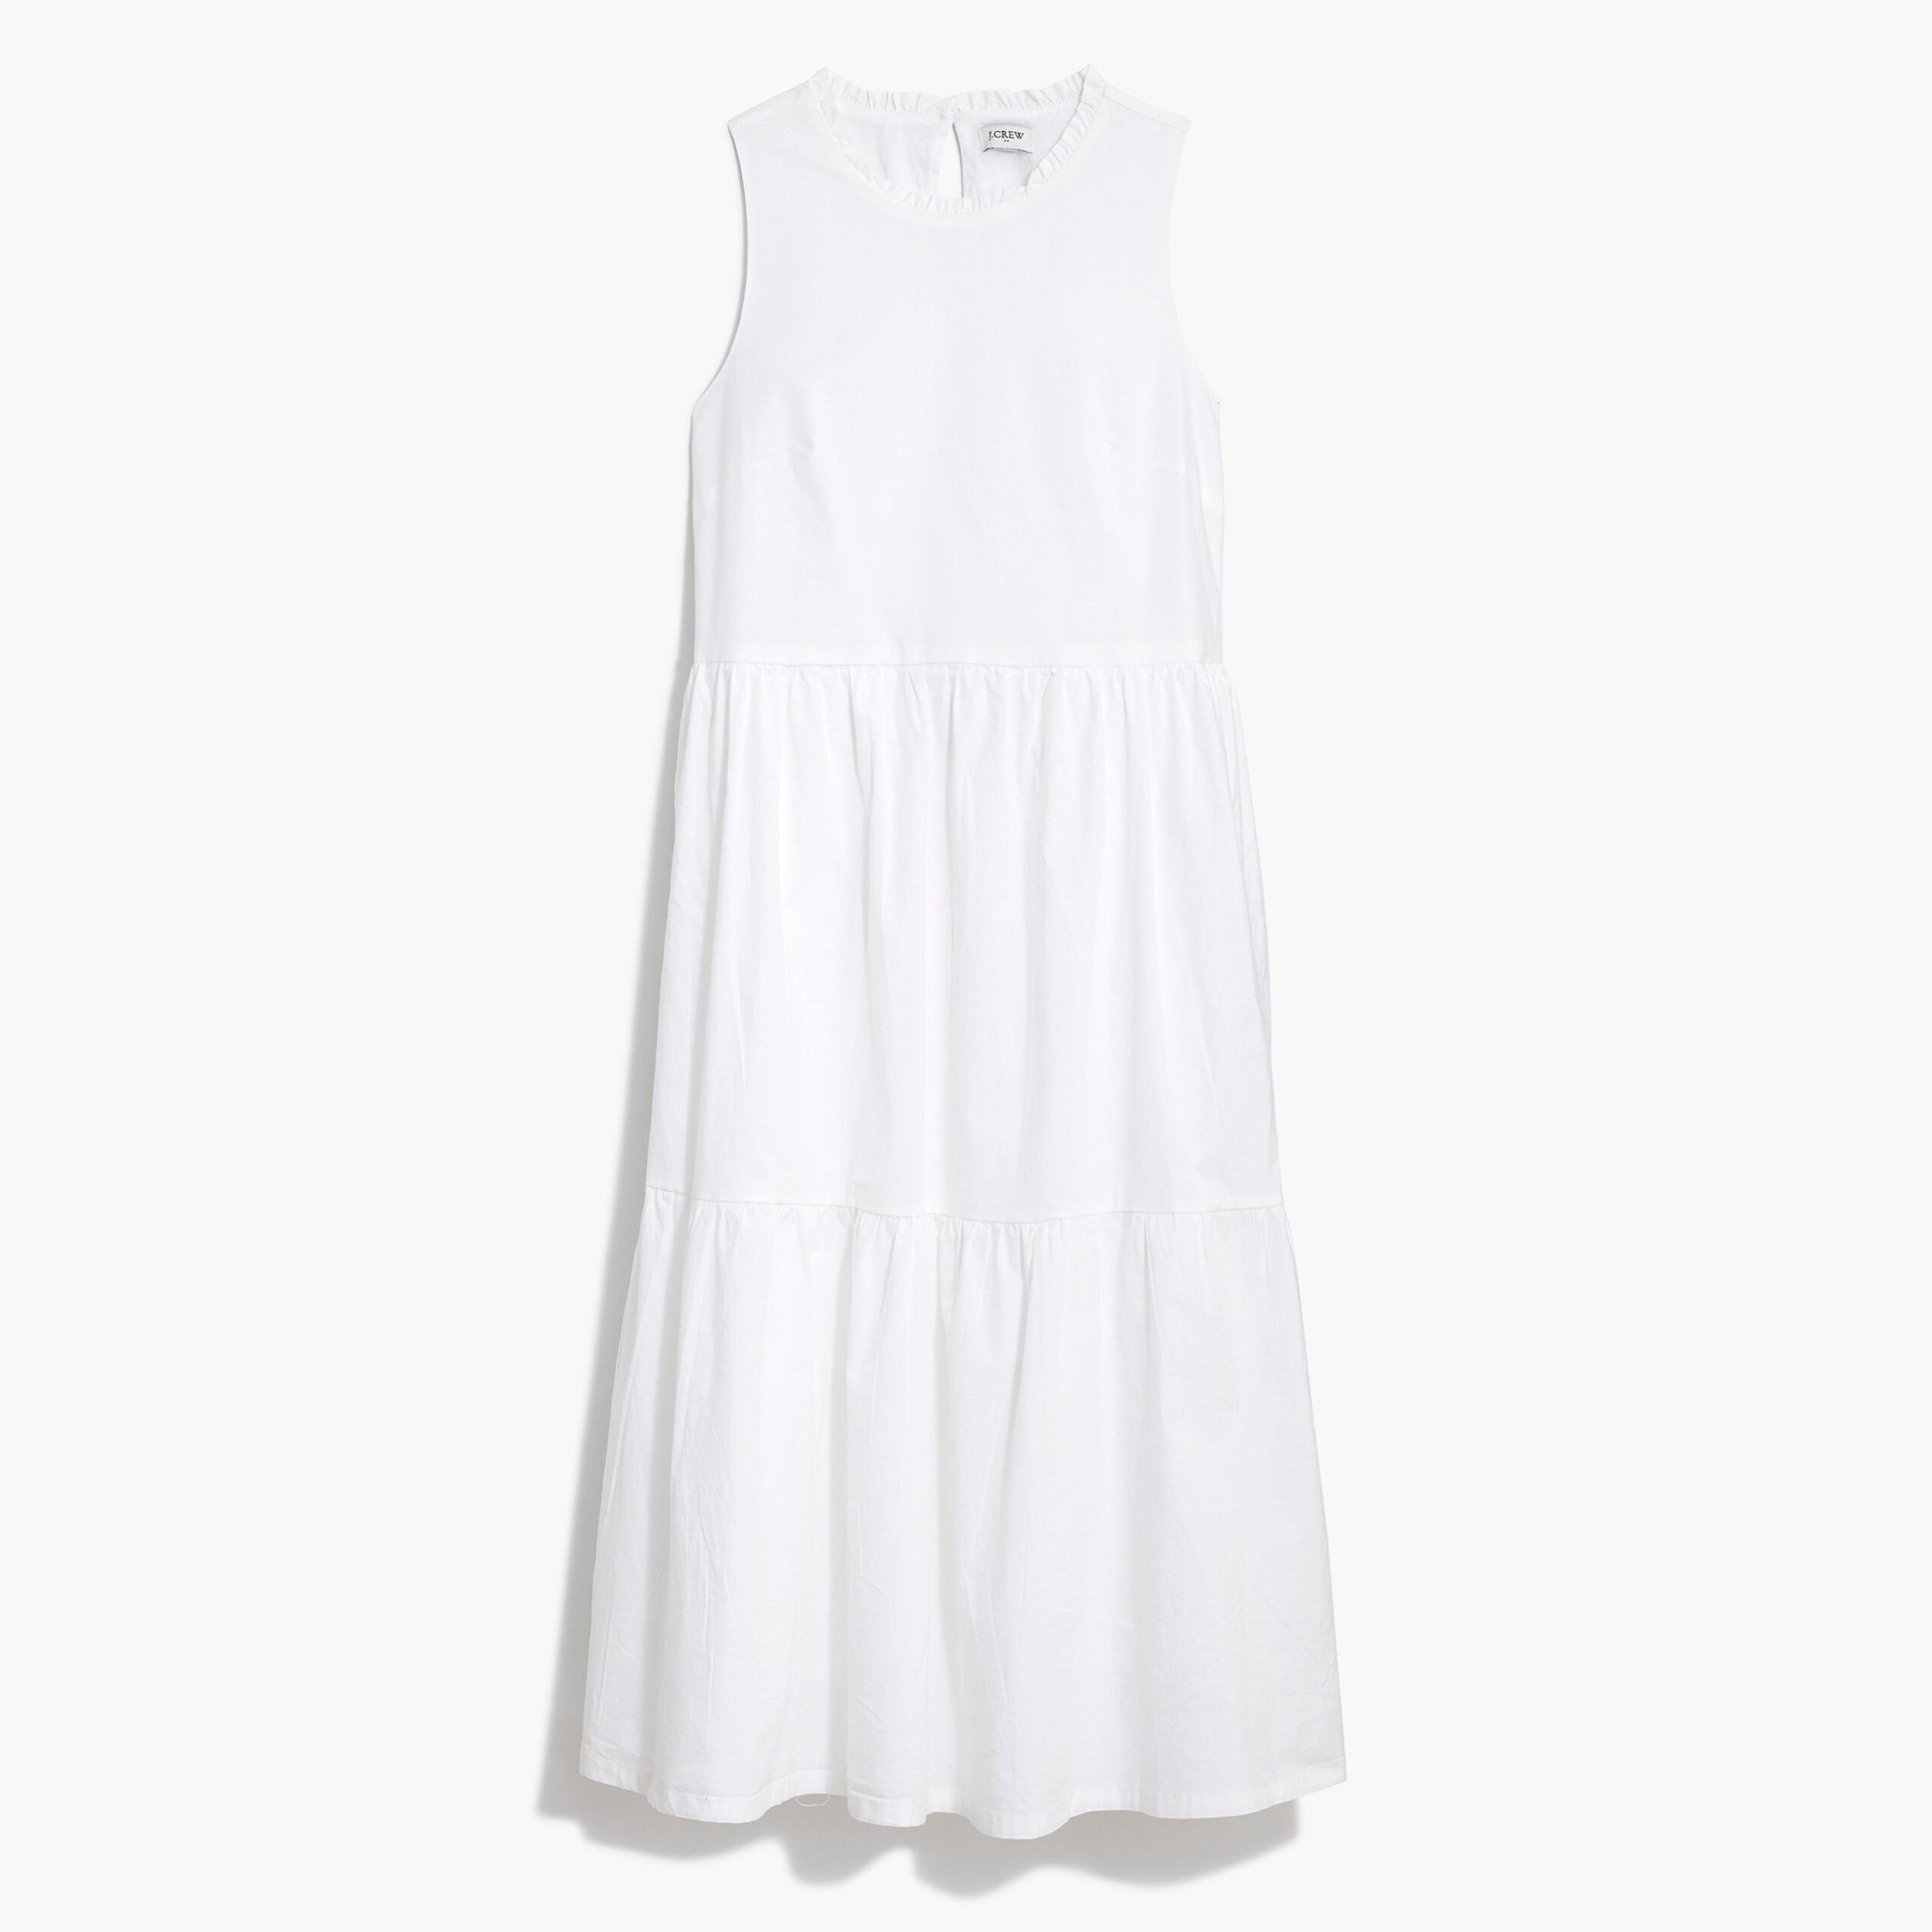 J.Crew Cotton Sleeveless Tiered Dress in White - Lyst